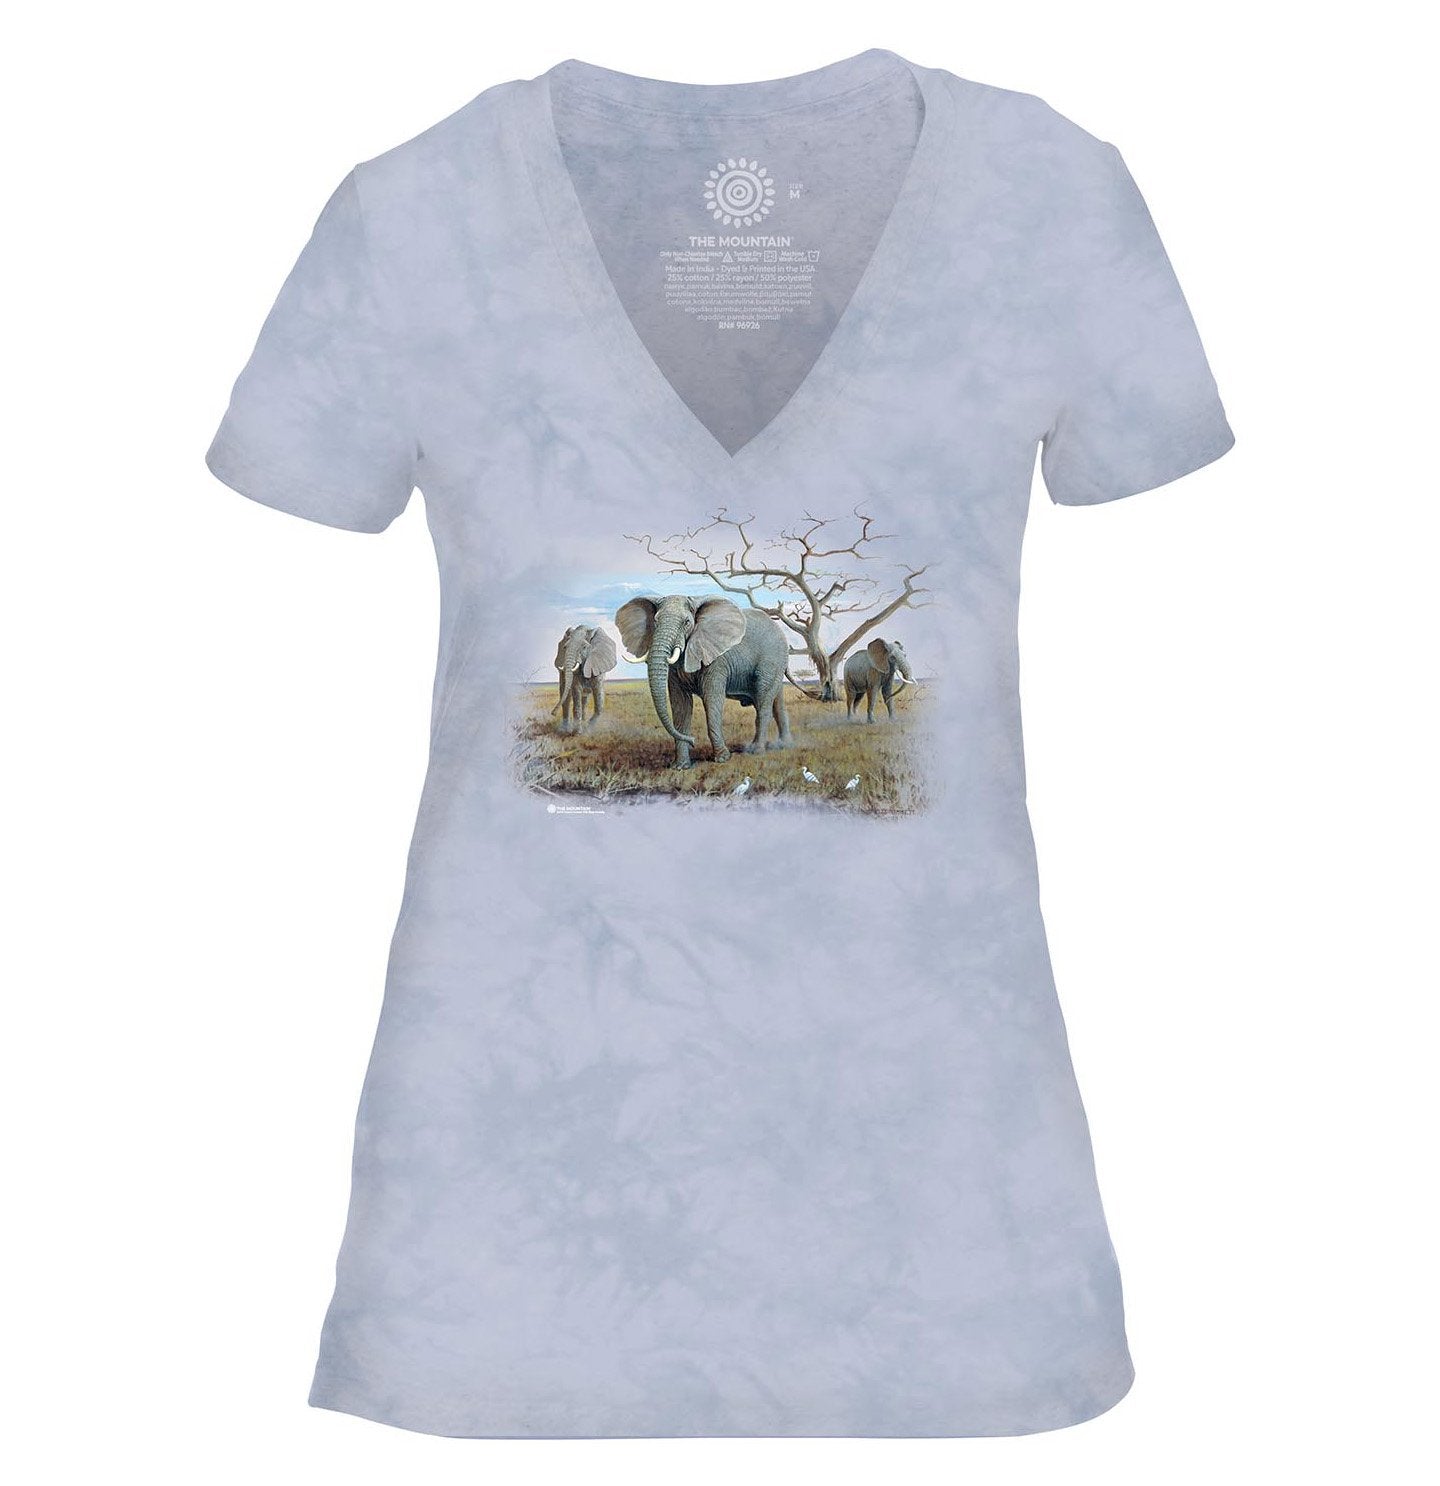 The Mountain - Three African Elephants - Women's Tri-Blend V-Neck T-Shirt